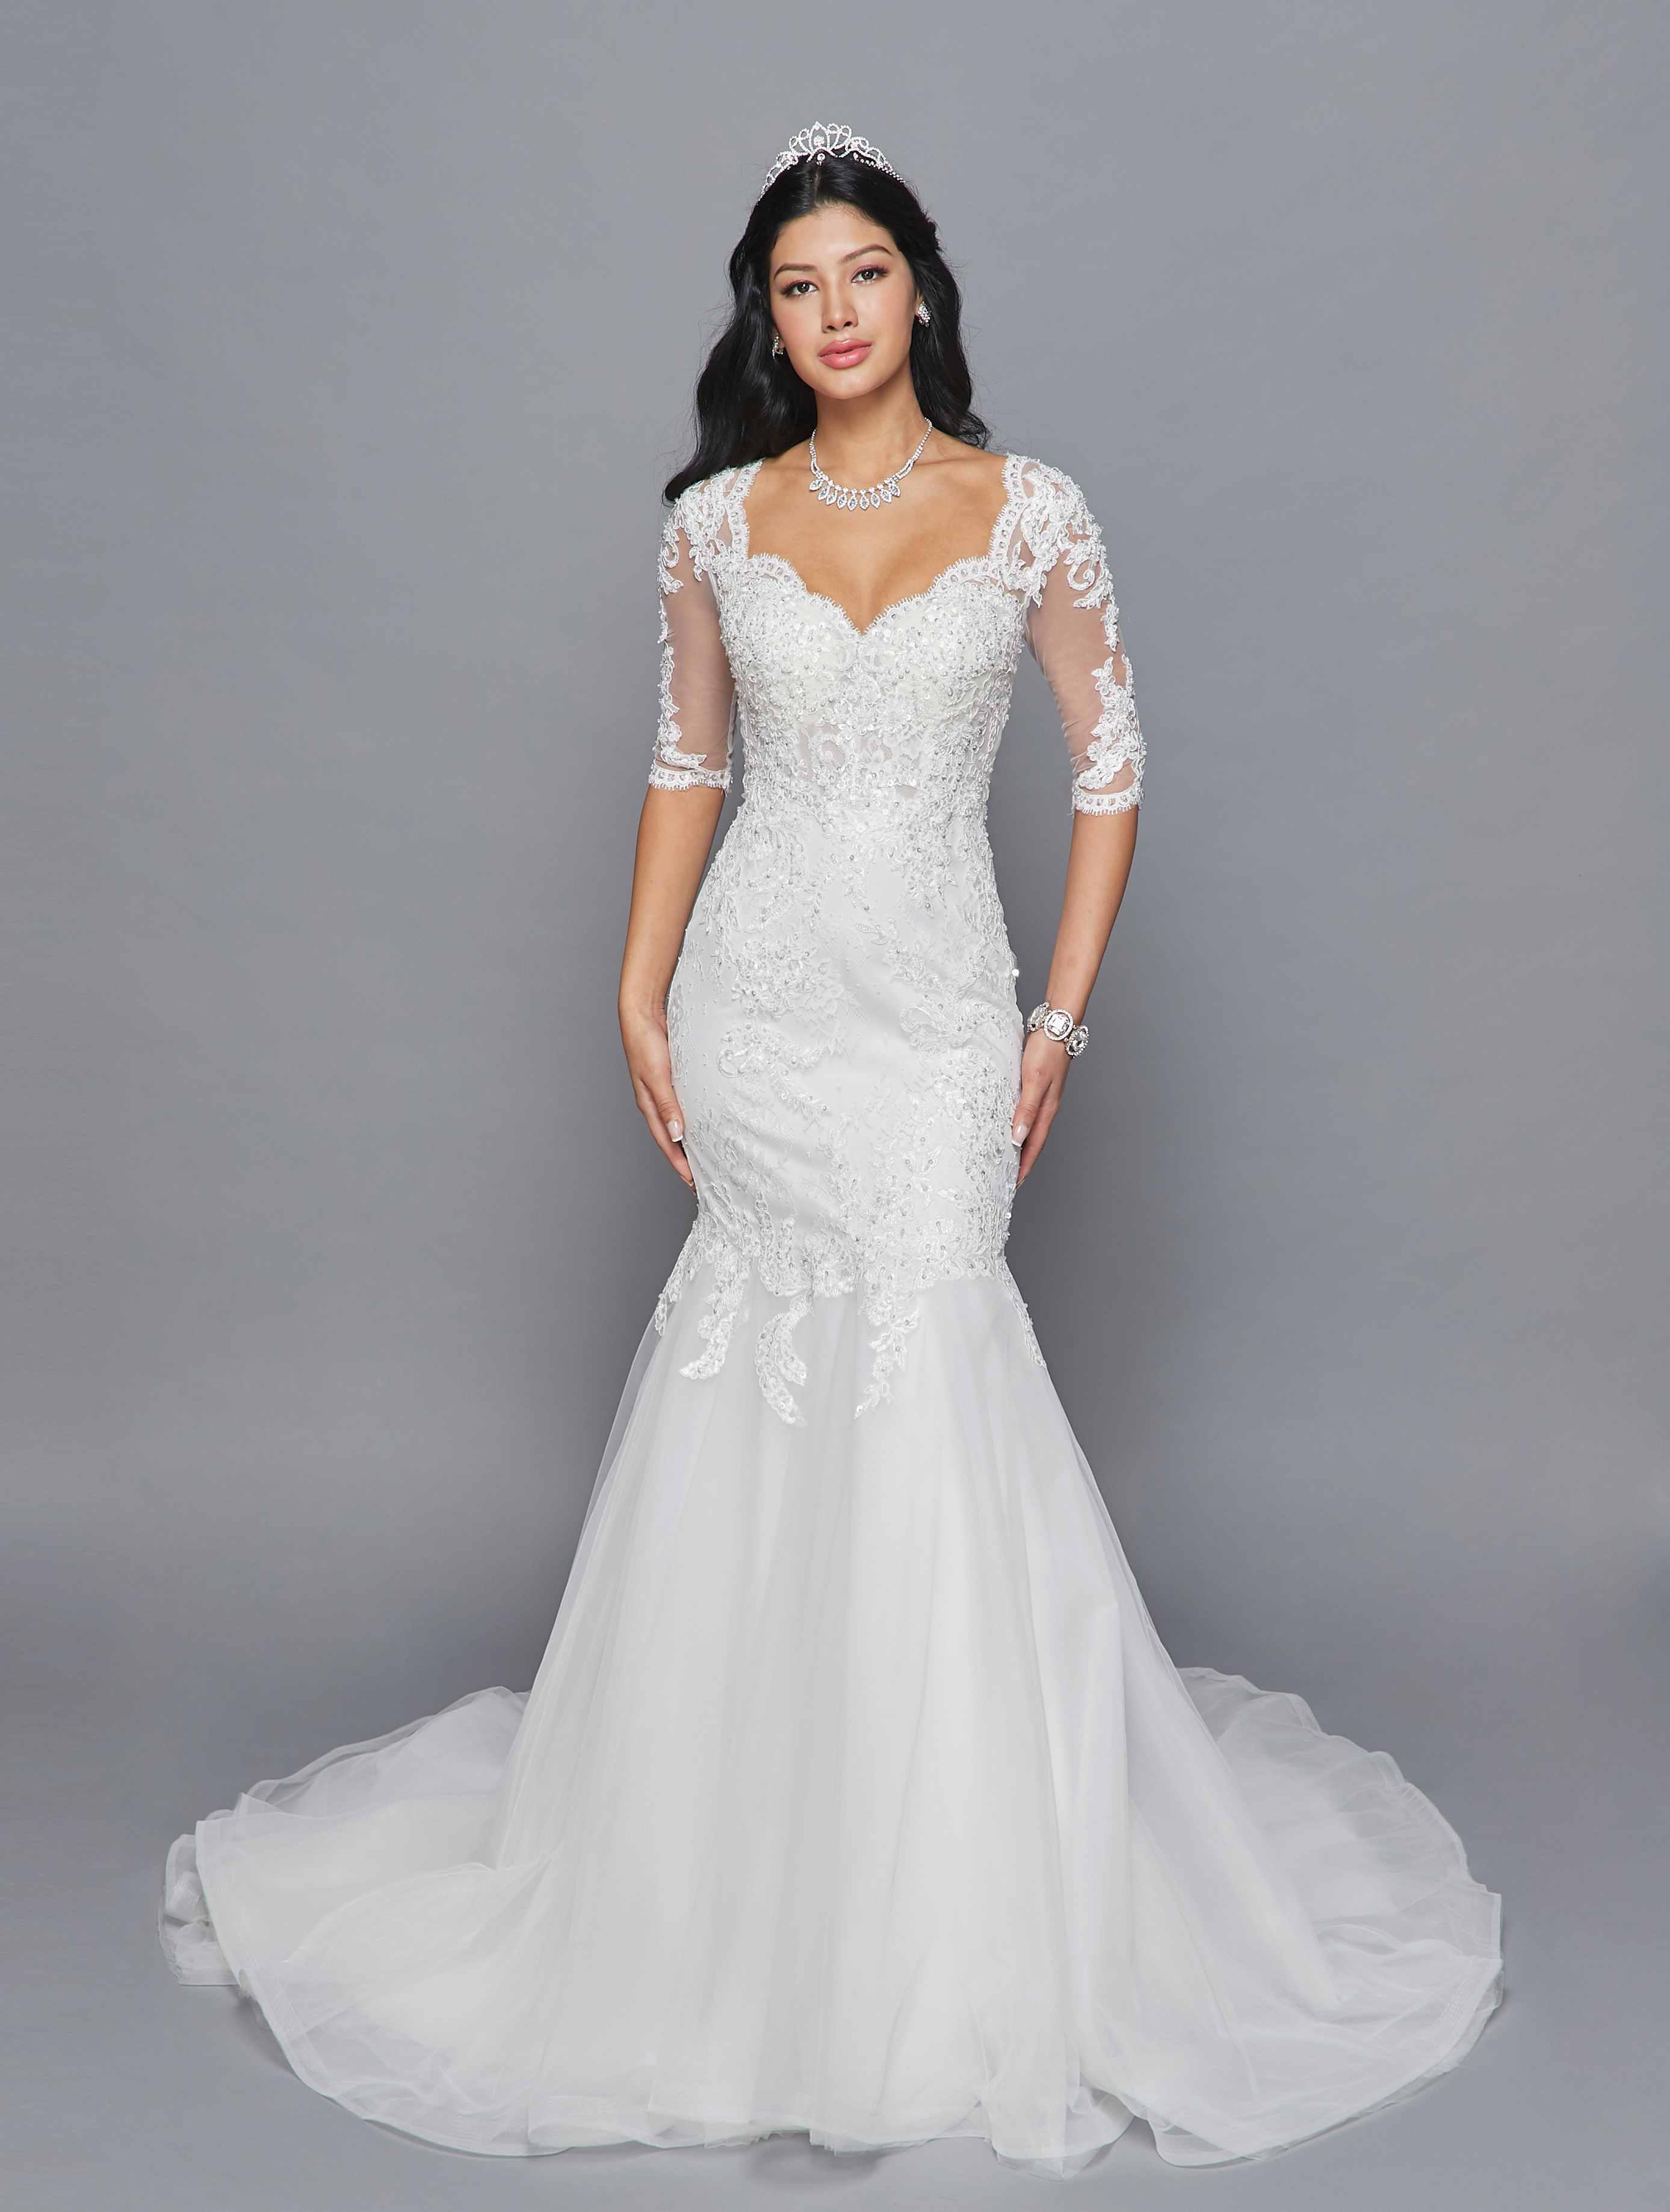 DeKlaire Bridal 418 Mid Length Sleeve V-Neckline Mermaid Court Train Wedding Dress Beaded Lace Applique